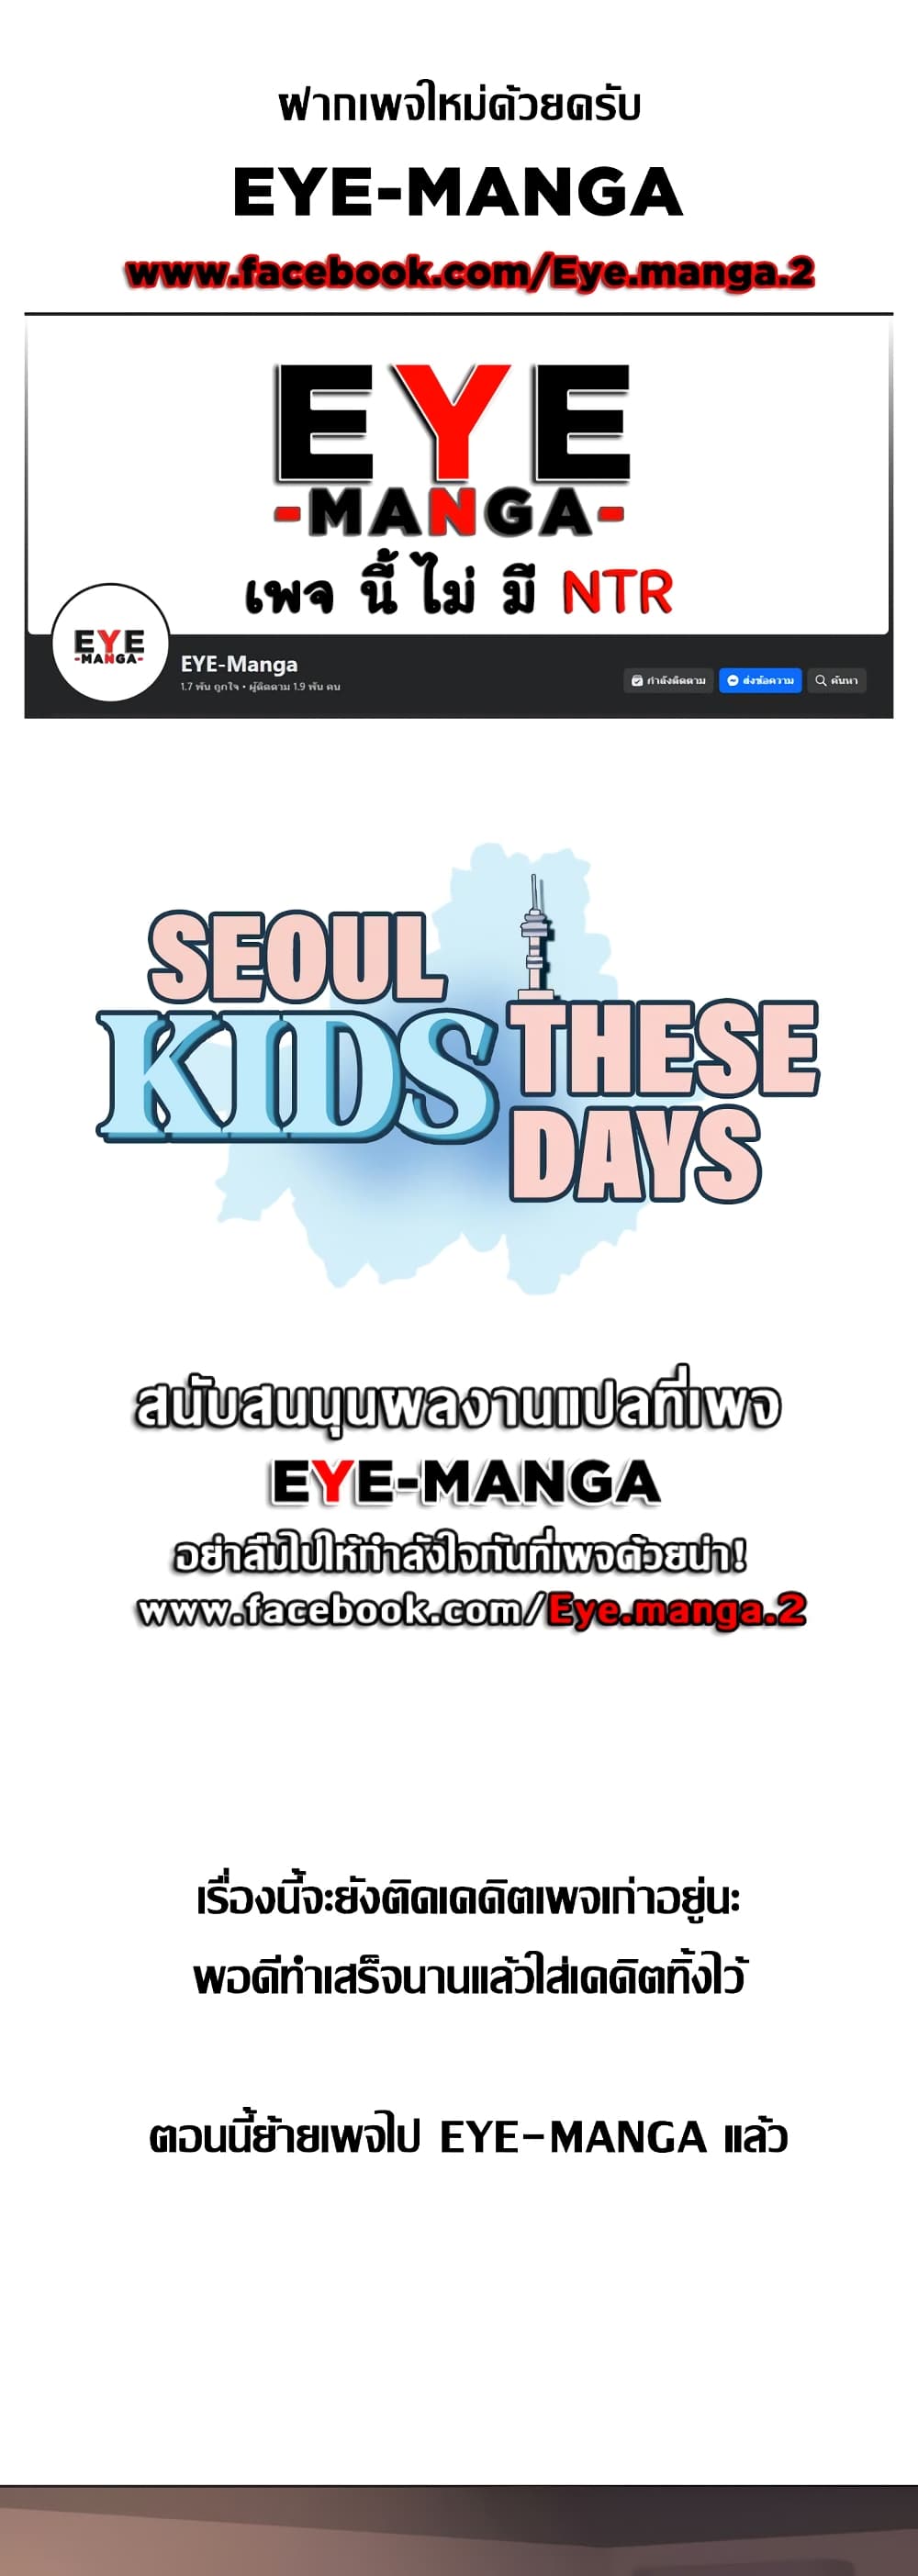 Seoul Kids These Days 12-12